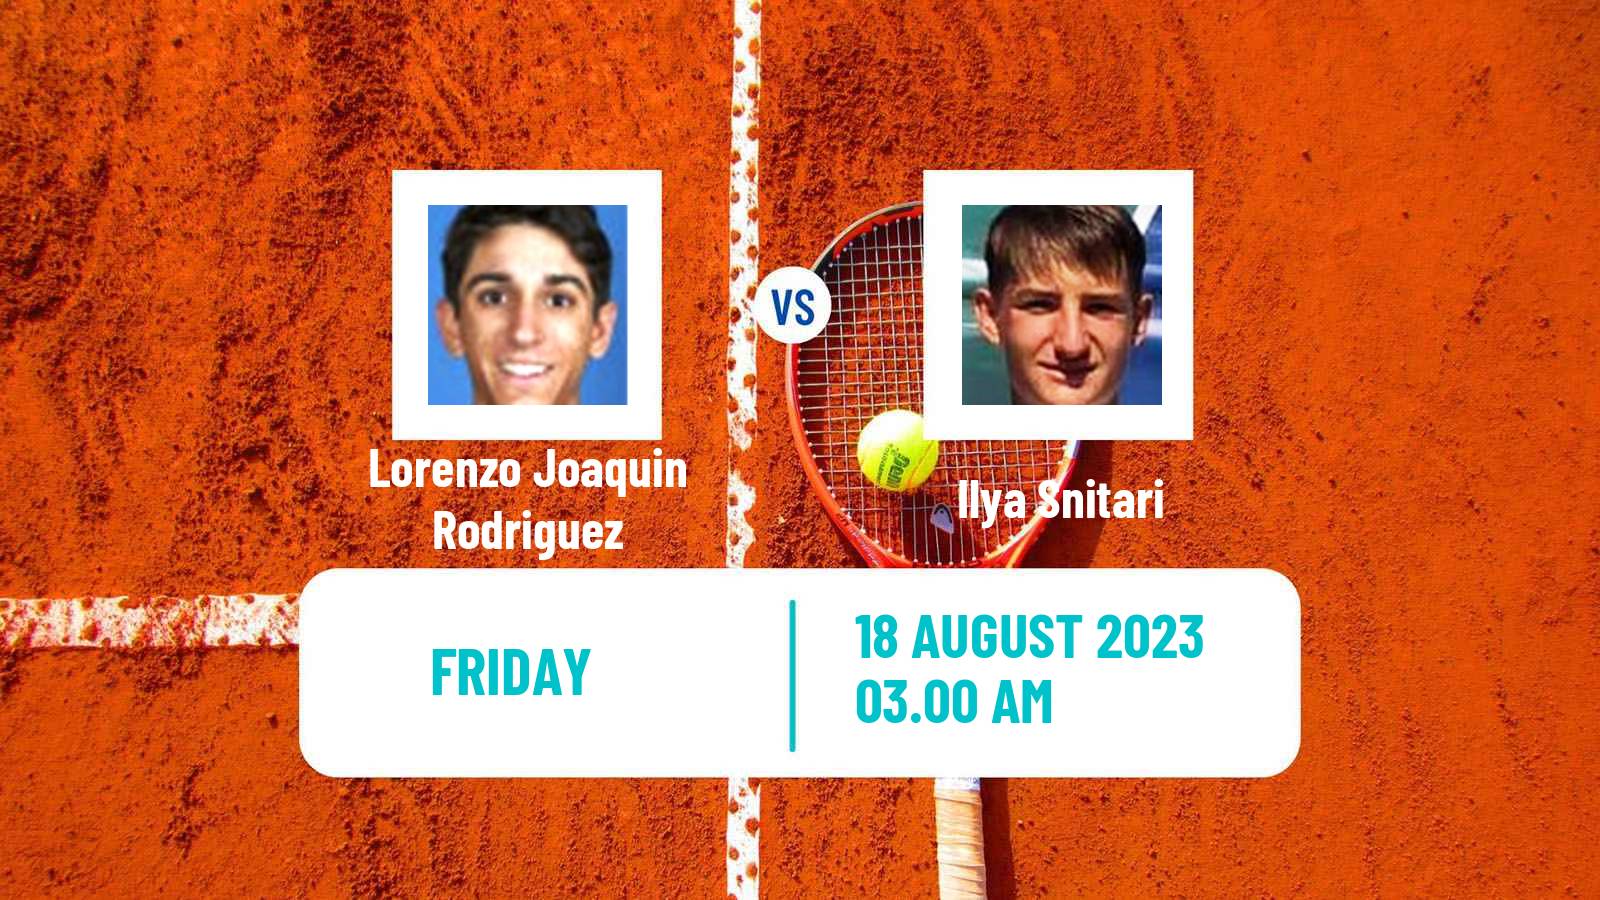 Tennis ITF M15 Targu Jiu Men Lorenzo Joaquin Rodriguez - Ilya Snitari